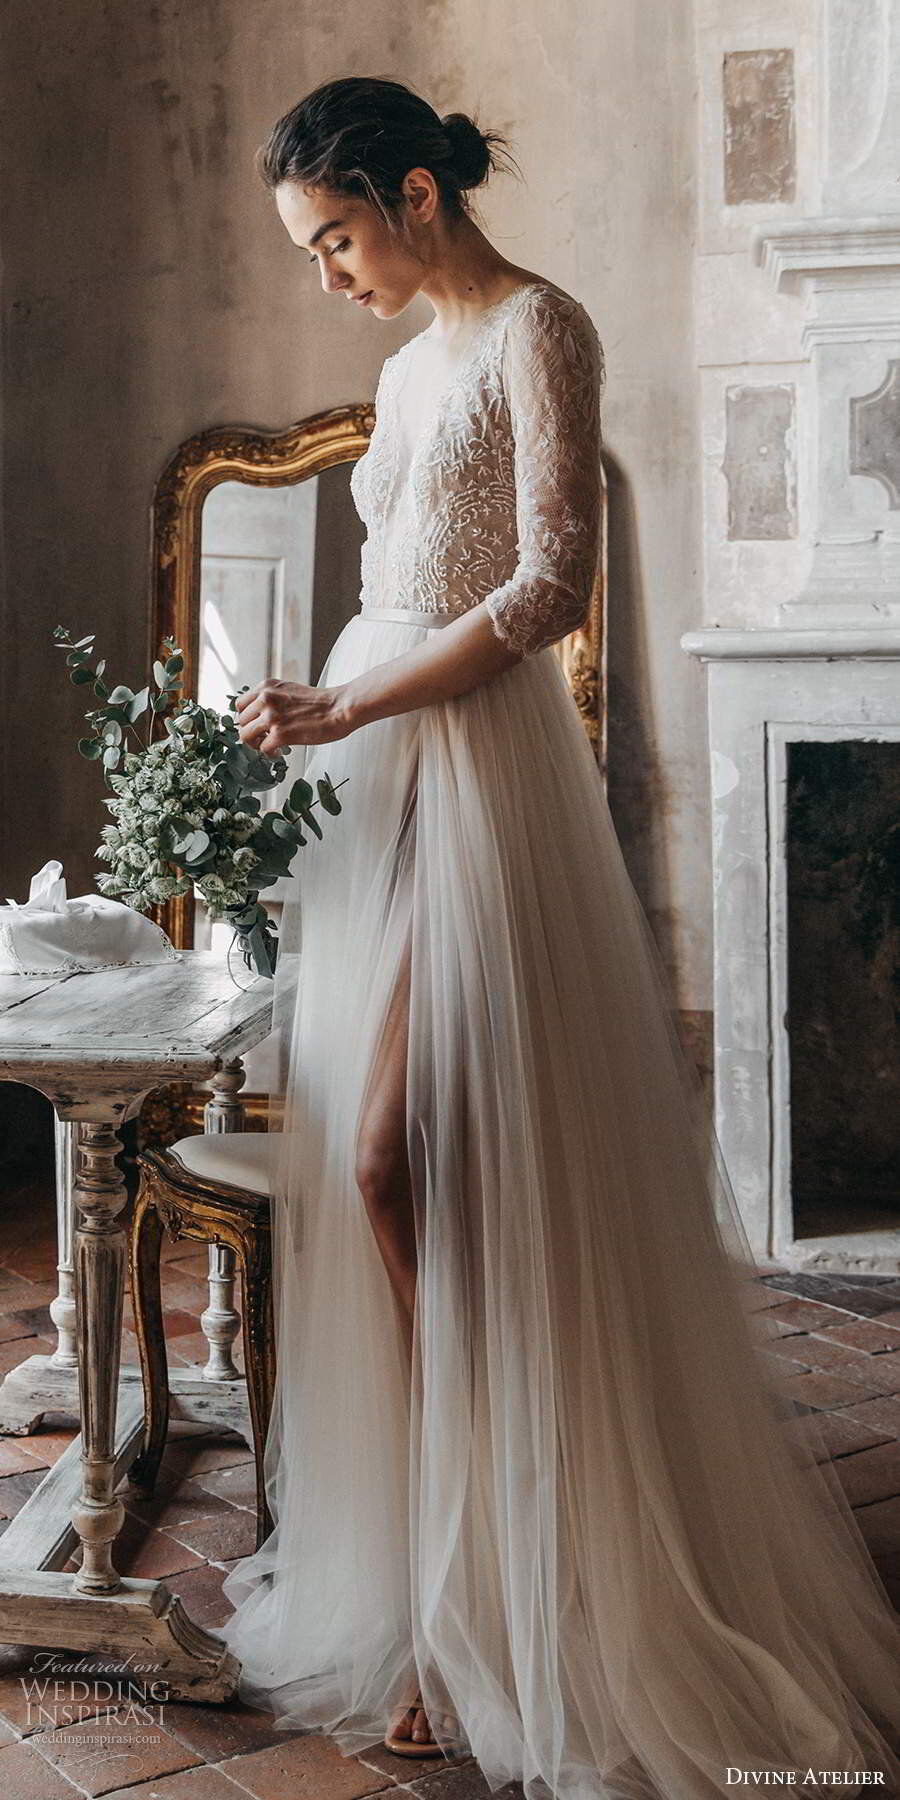 divine-atelier-2020-bridal-3-quarter-illusion-sleeves-v-neckline-heavily-embellished-bodice-romantic-a-line-ball-gown-wedding-dress-slit-skirt-sweep-train-1-mv.jpg